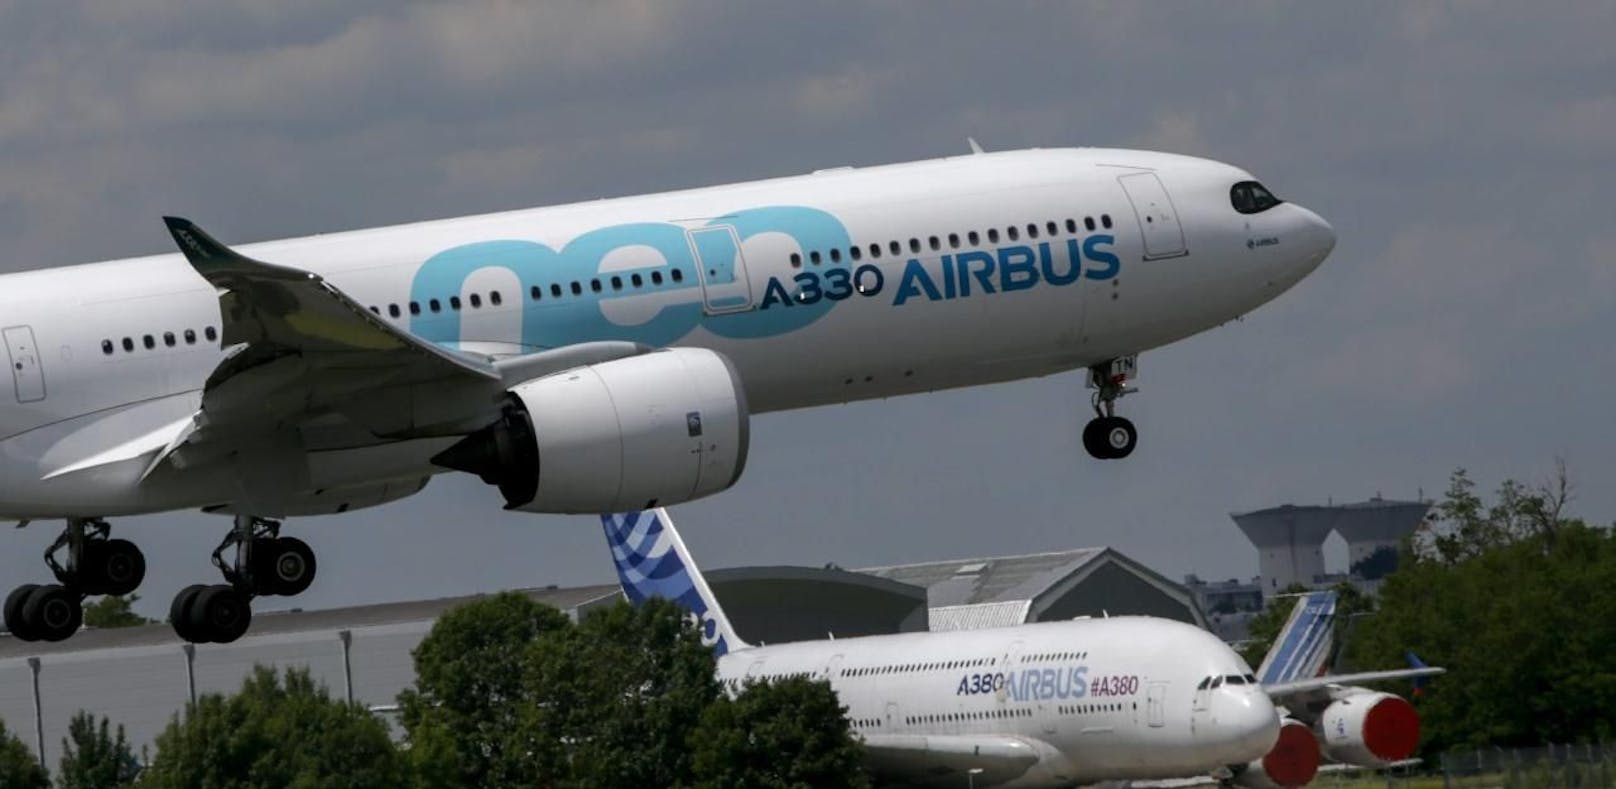 Warnung an Airbus-Piloten: Risiko bei Landung